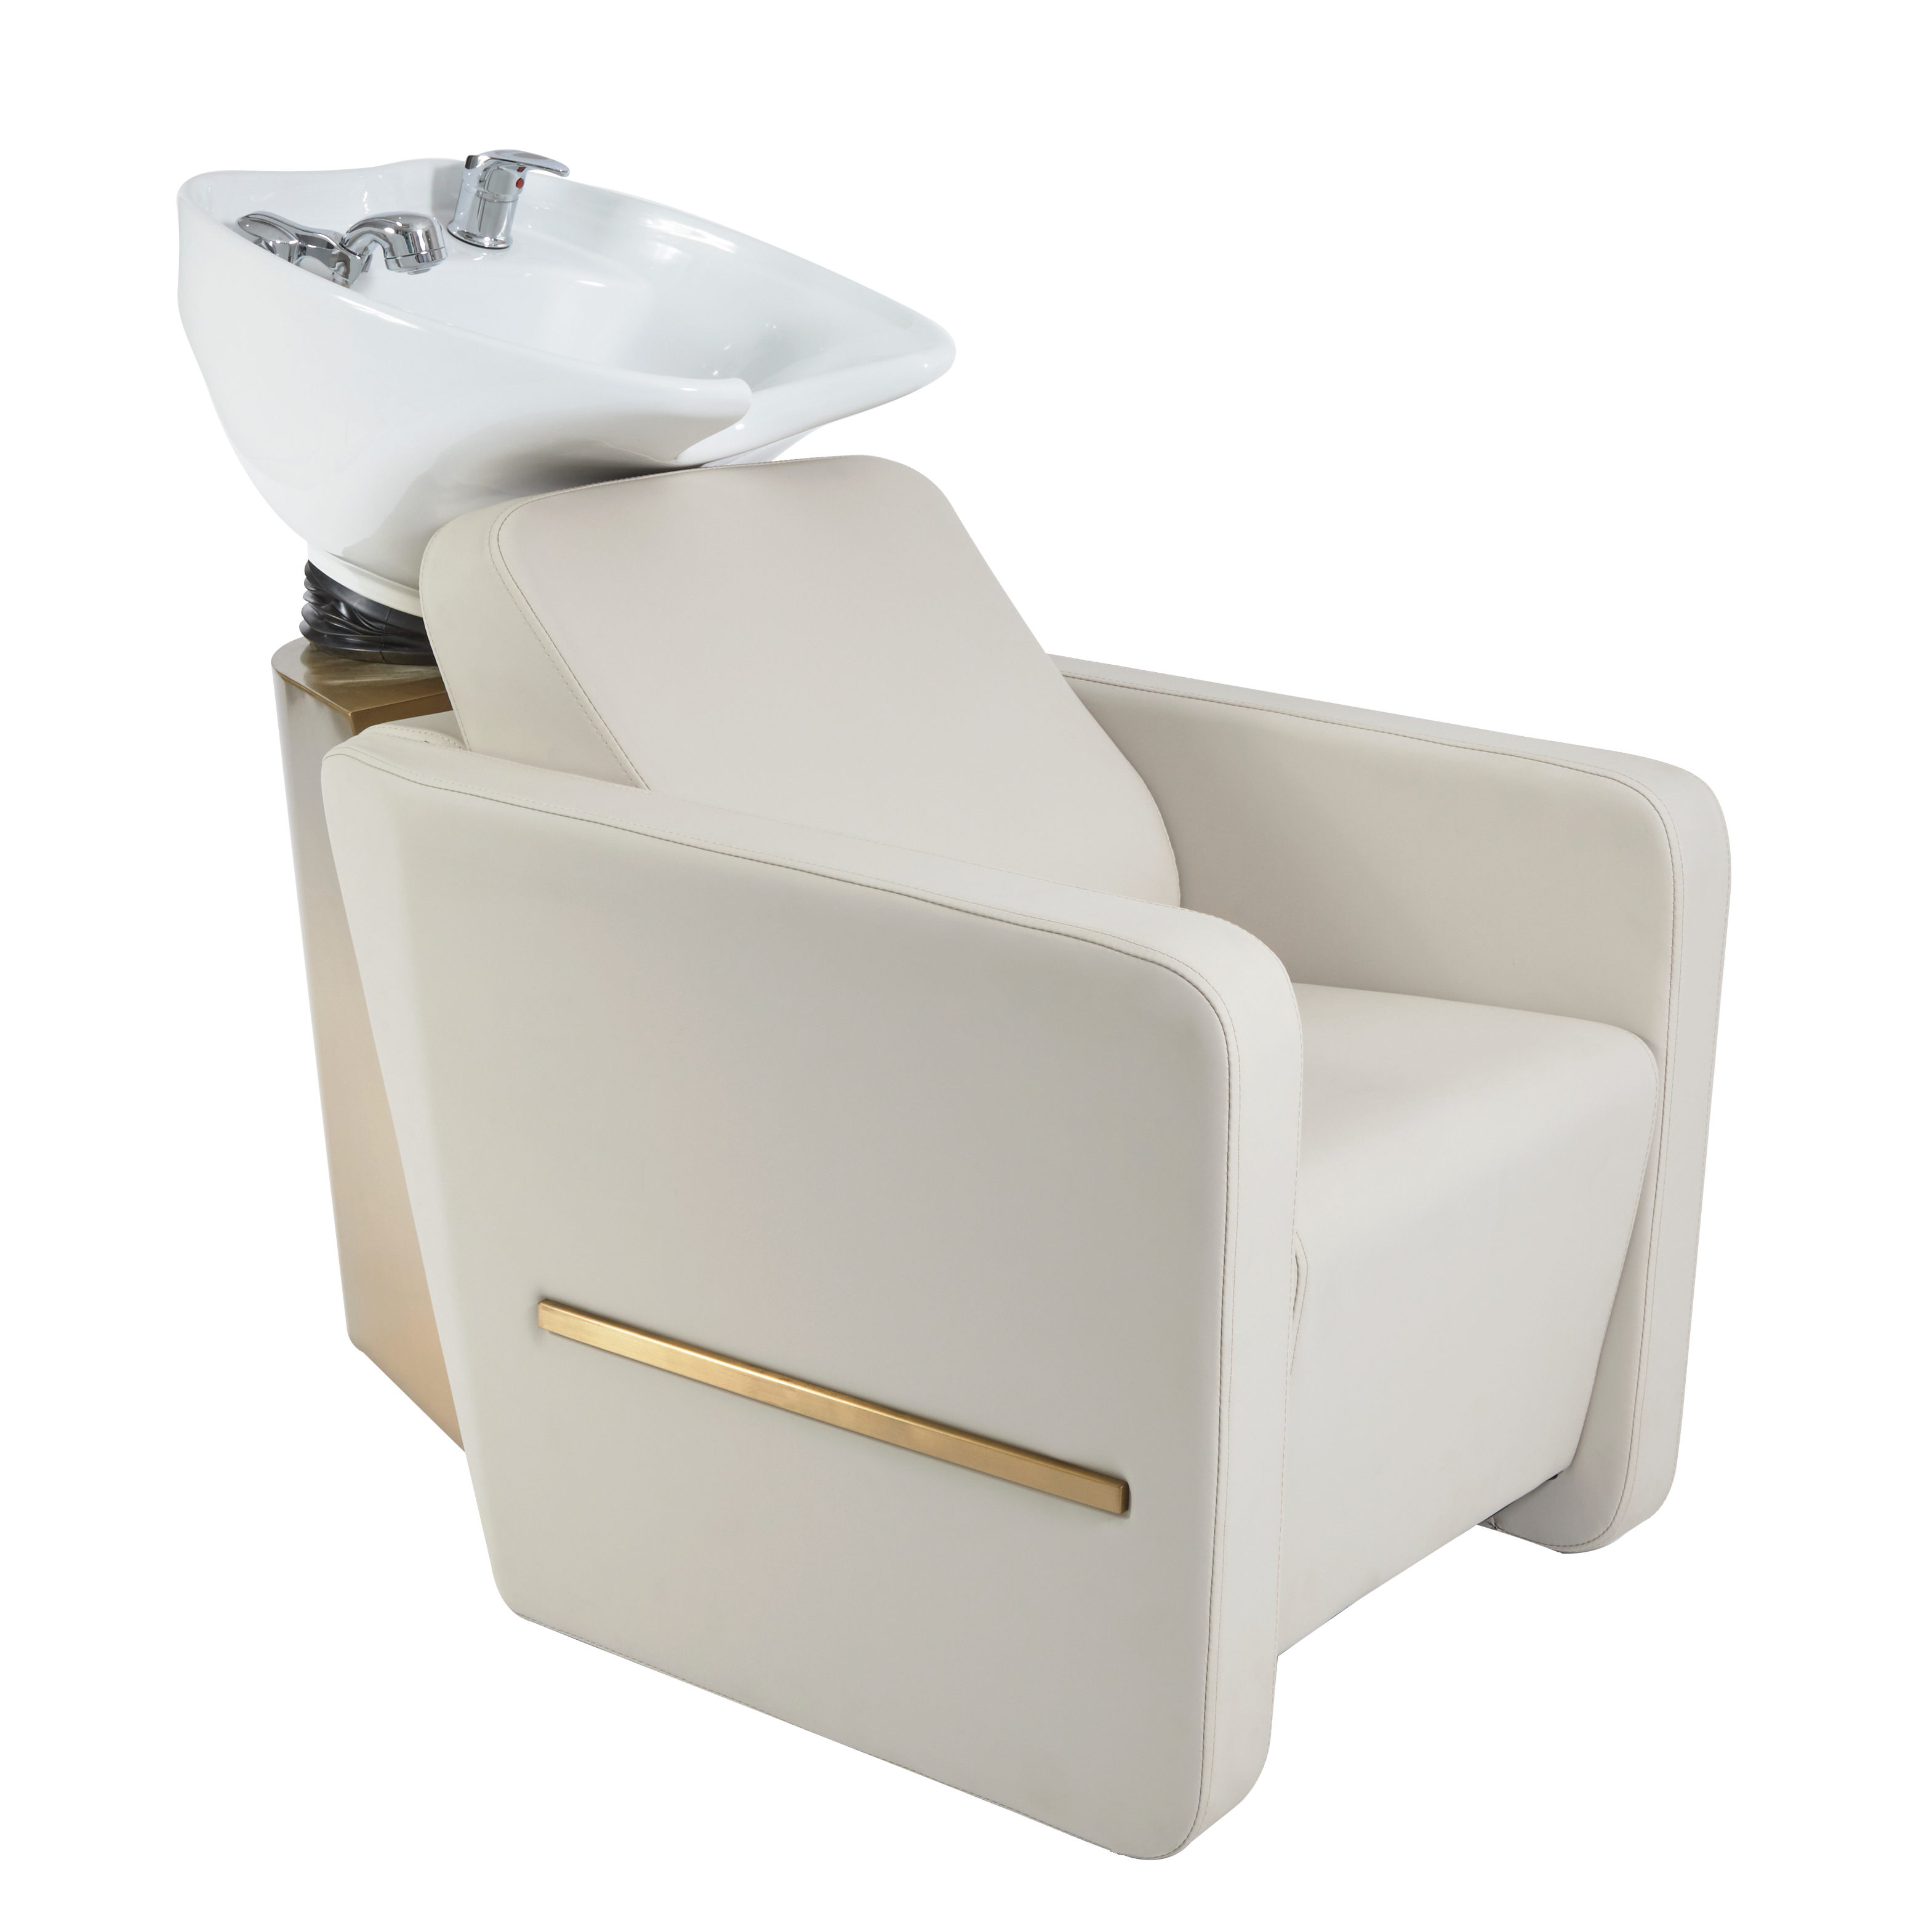 The Daisi Salon Backwash Unit - Ivory & Gold by SEC